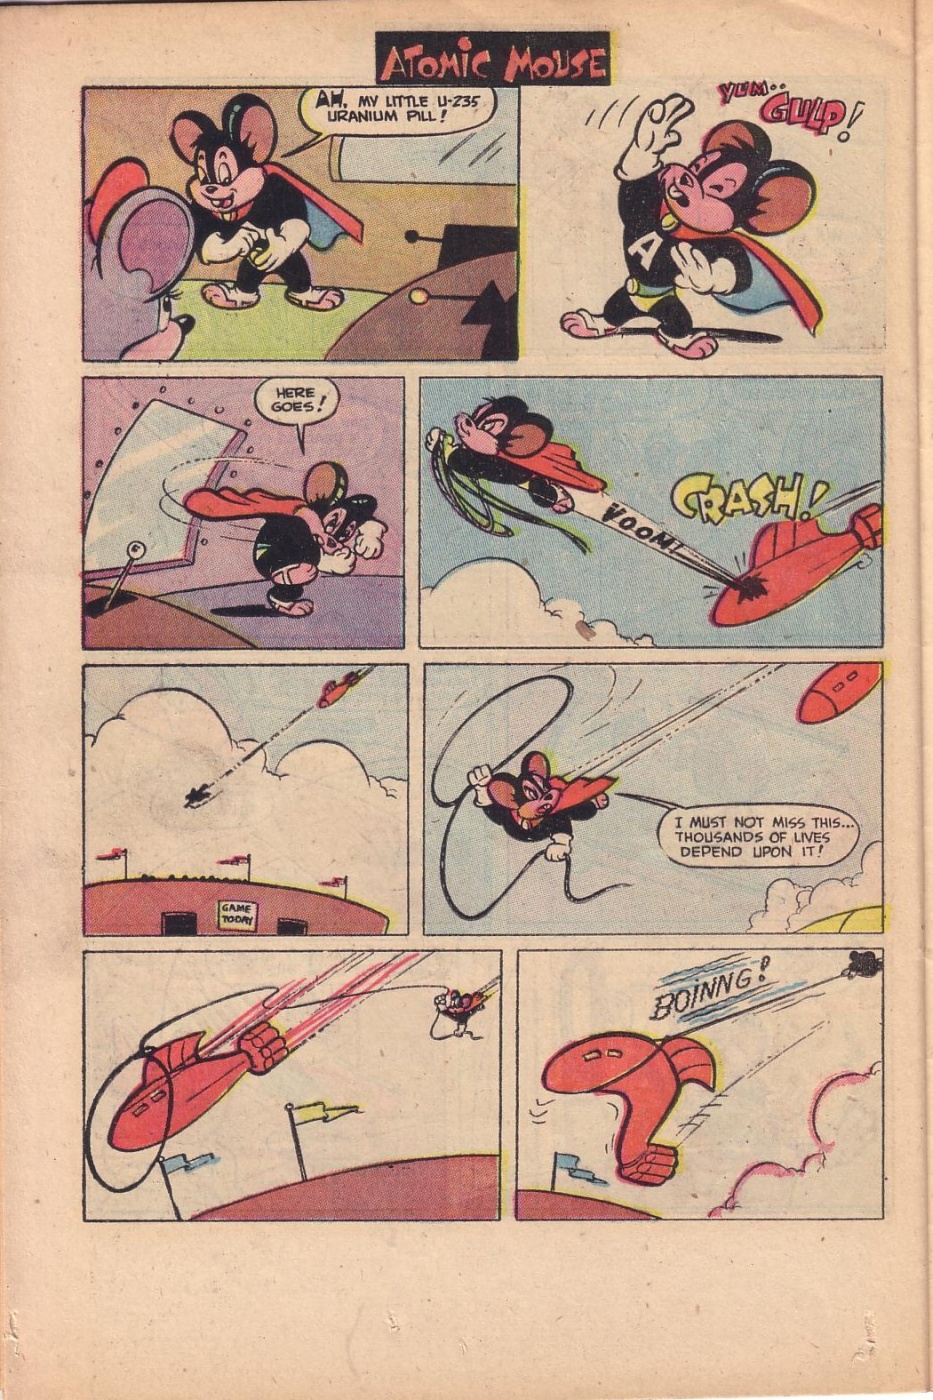 Atomic Mouse Comics - Funny Comics (24)